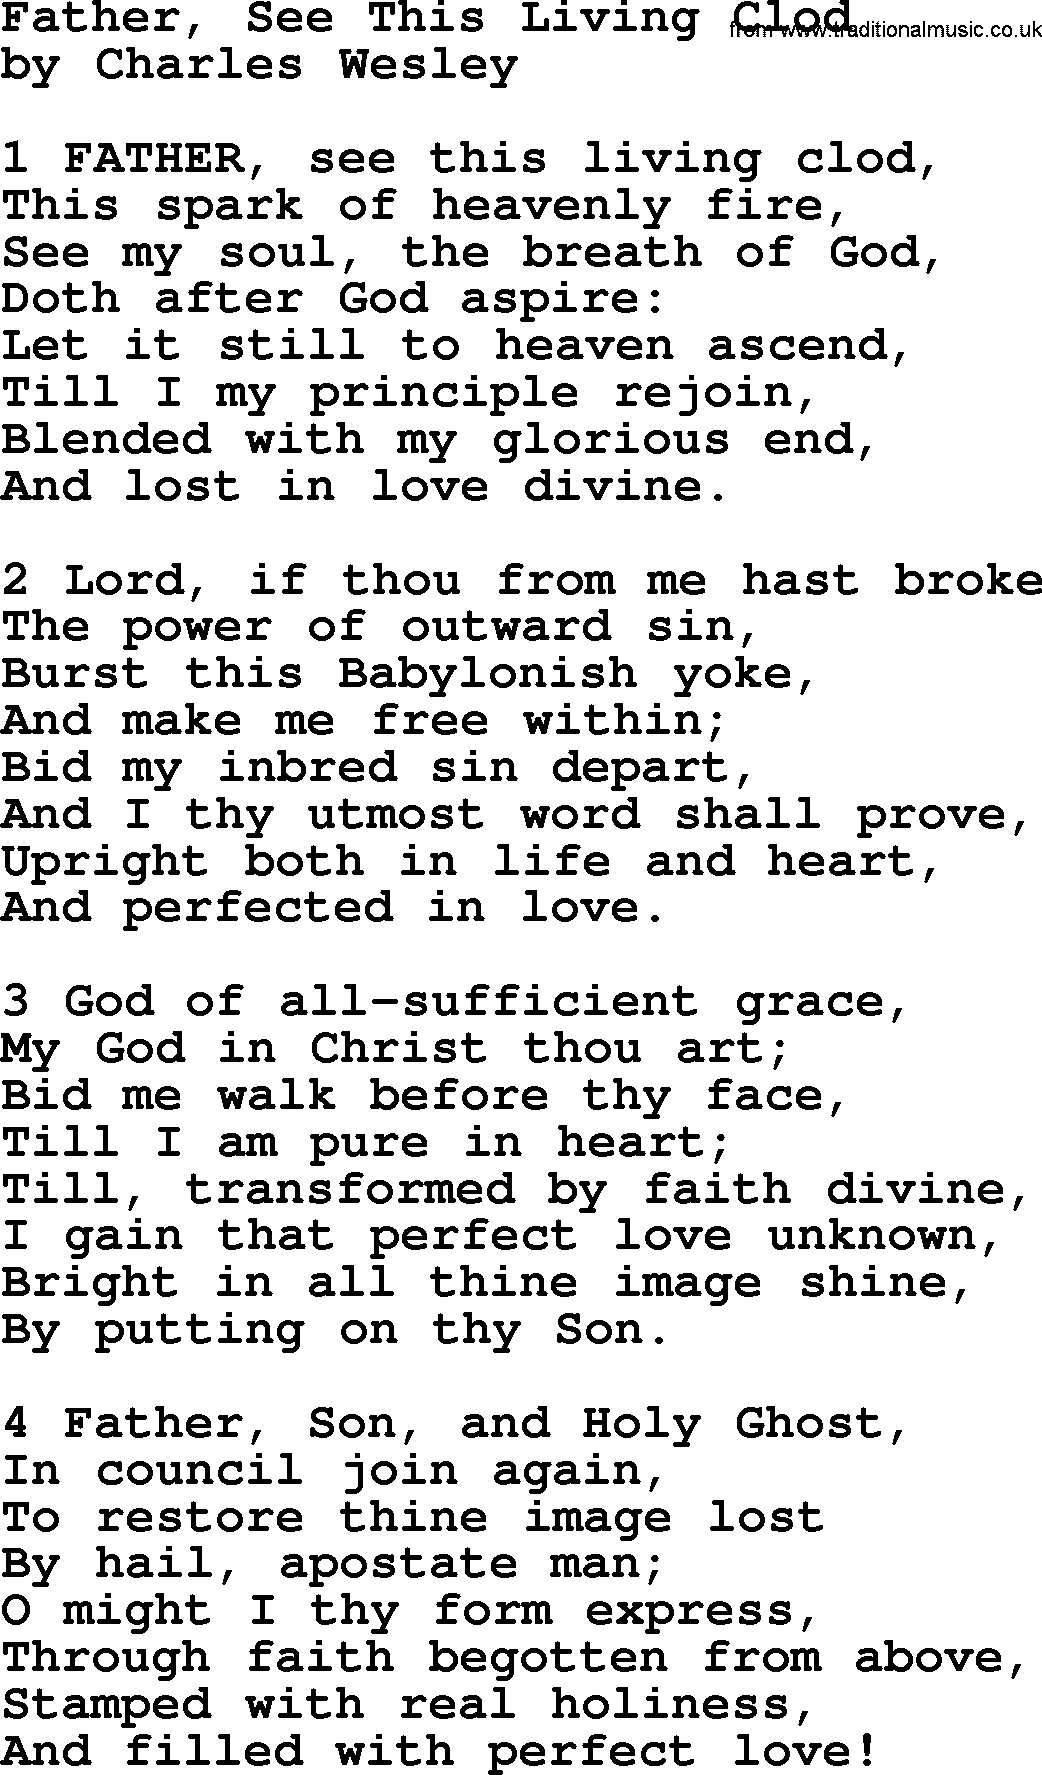 Charles Wesley hymn: Father, See This Living Clod, lyrics